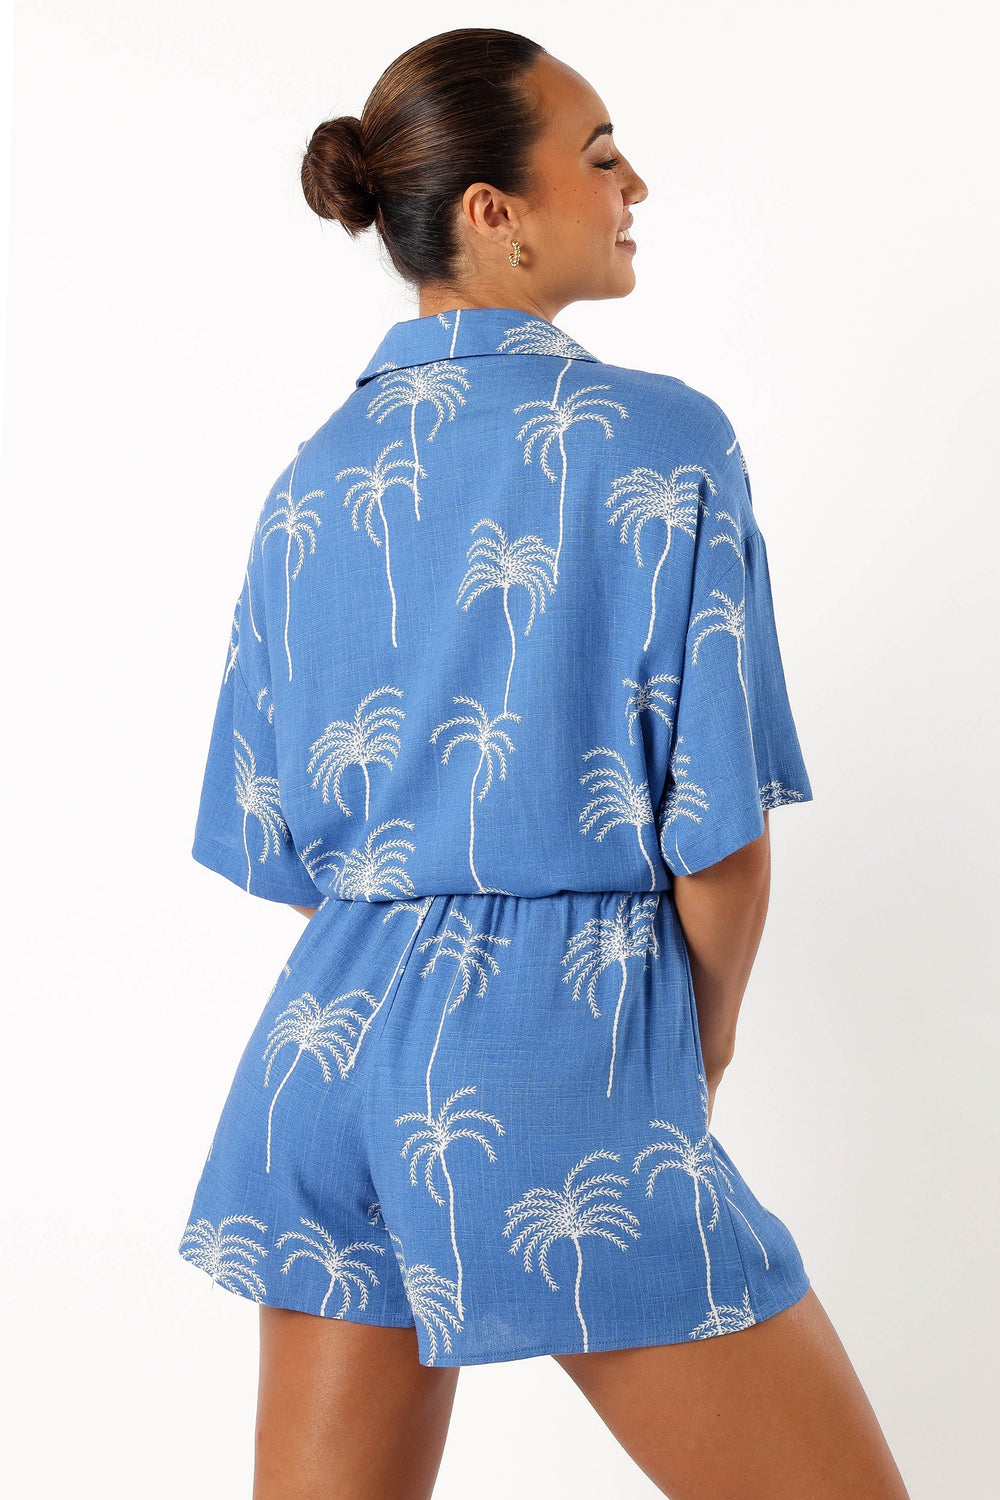 Amira Shorts - Blue Palm Print - Petal & Pup USA